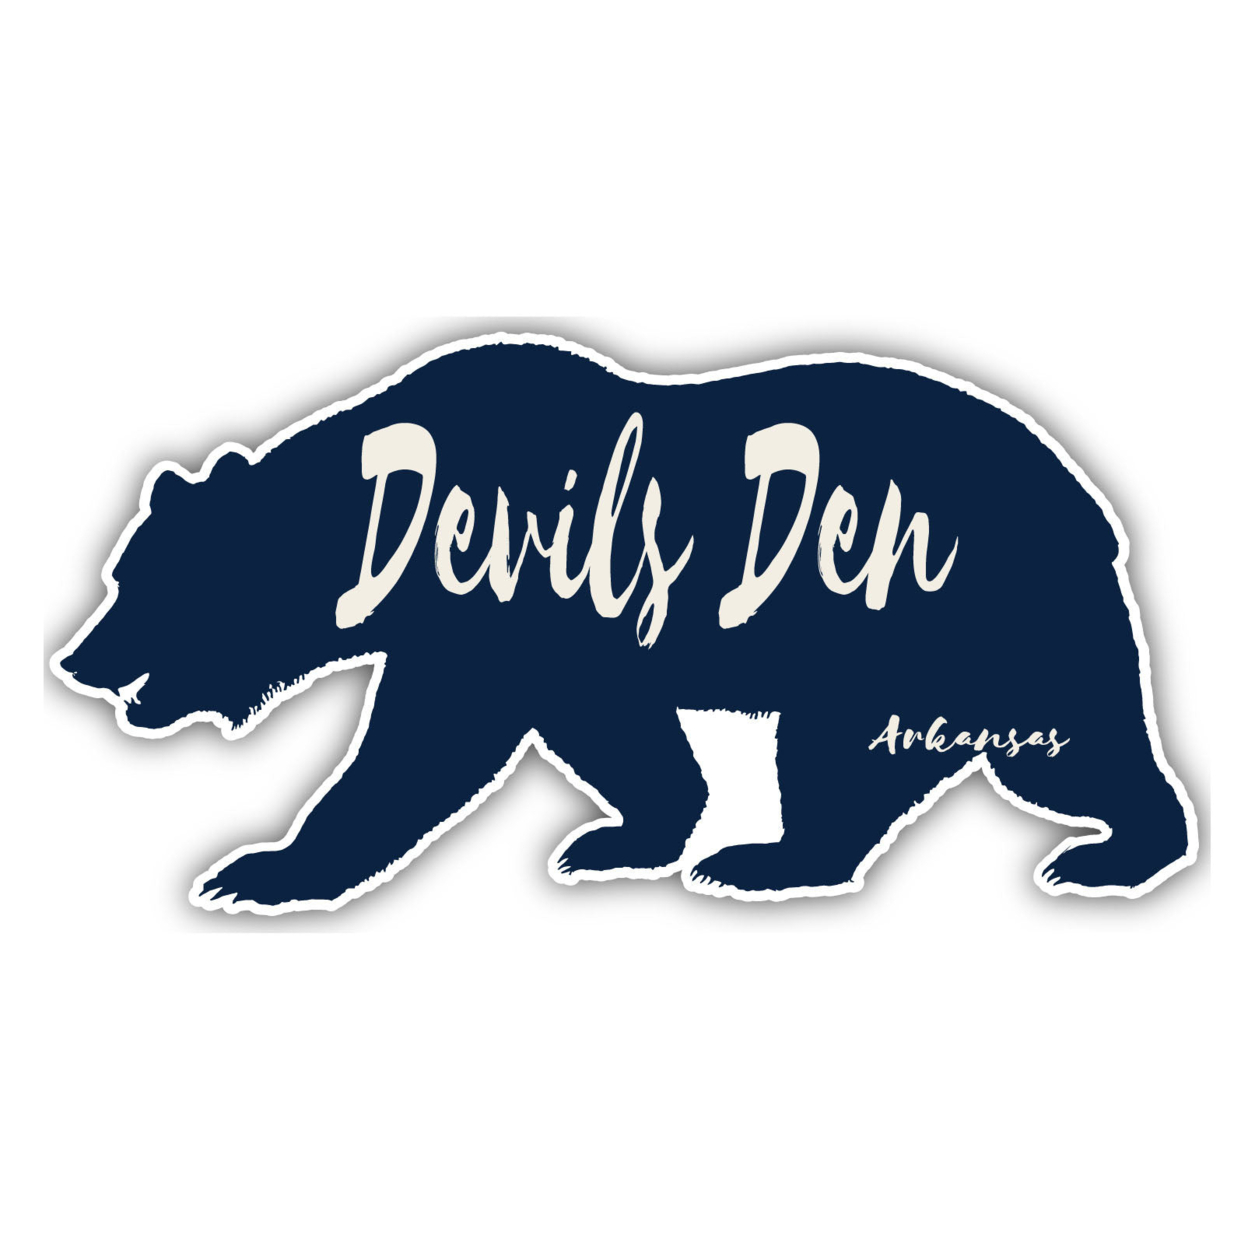 Devils Den Arkansas Souvenir Decorative Stickers (Choose Theme And Size) - 4-Pack, 2-Inch, Great Outdoors